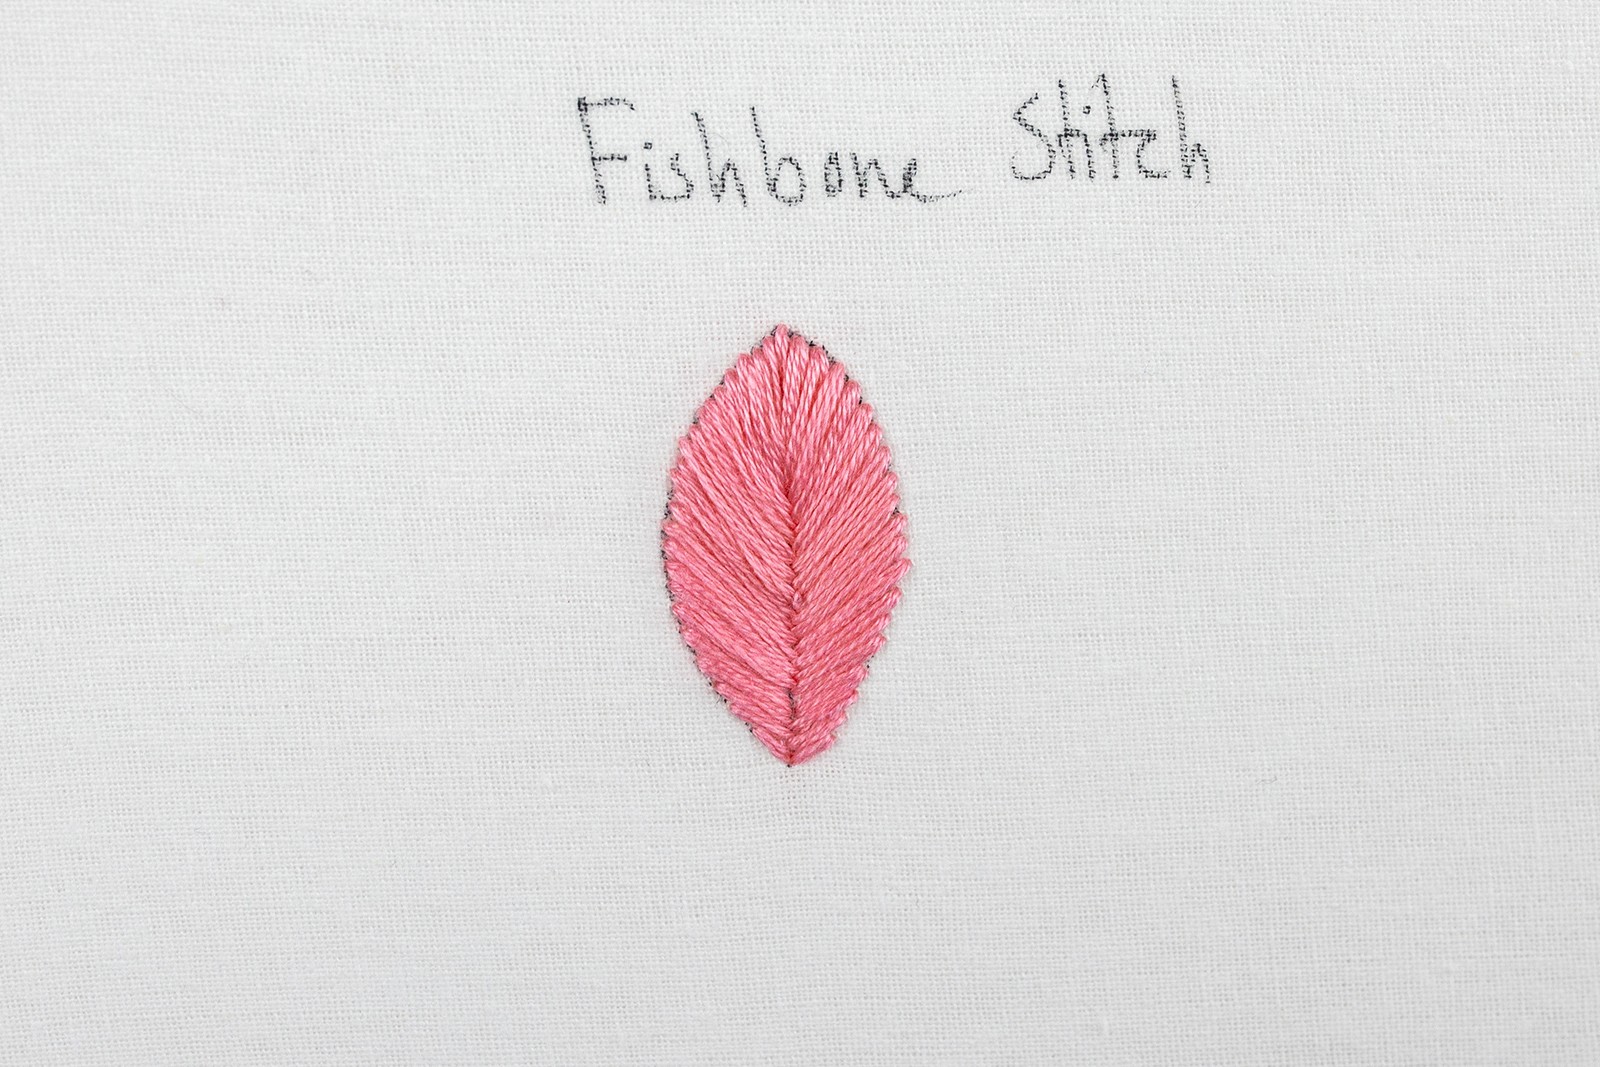 Fishbone stitch is used to create a leaf shape.